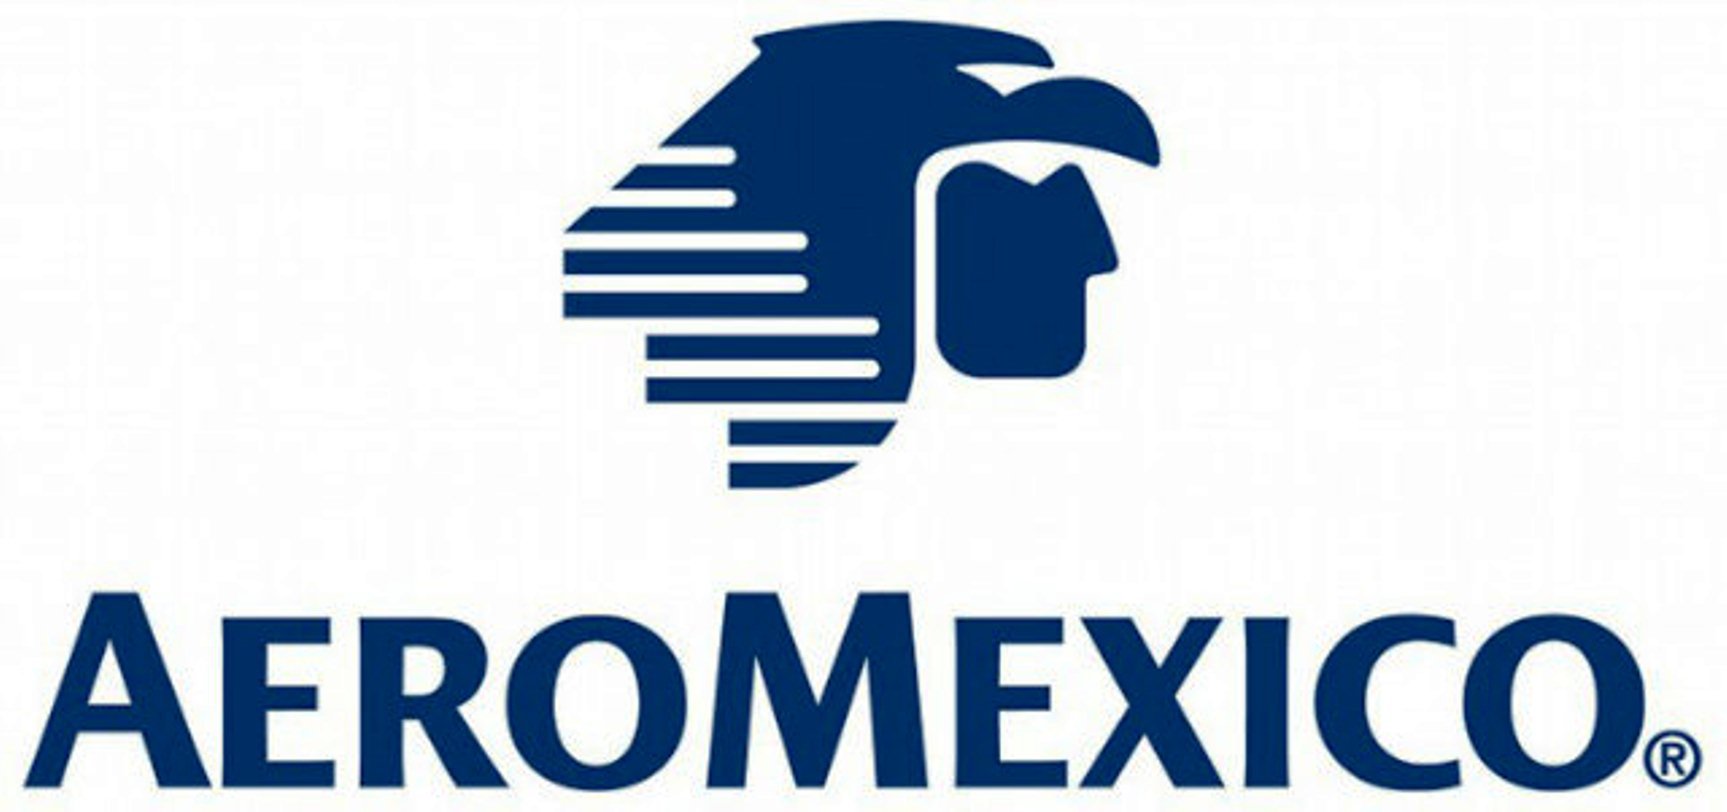 Aeromexico Logo photo - 1